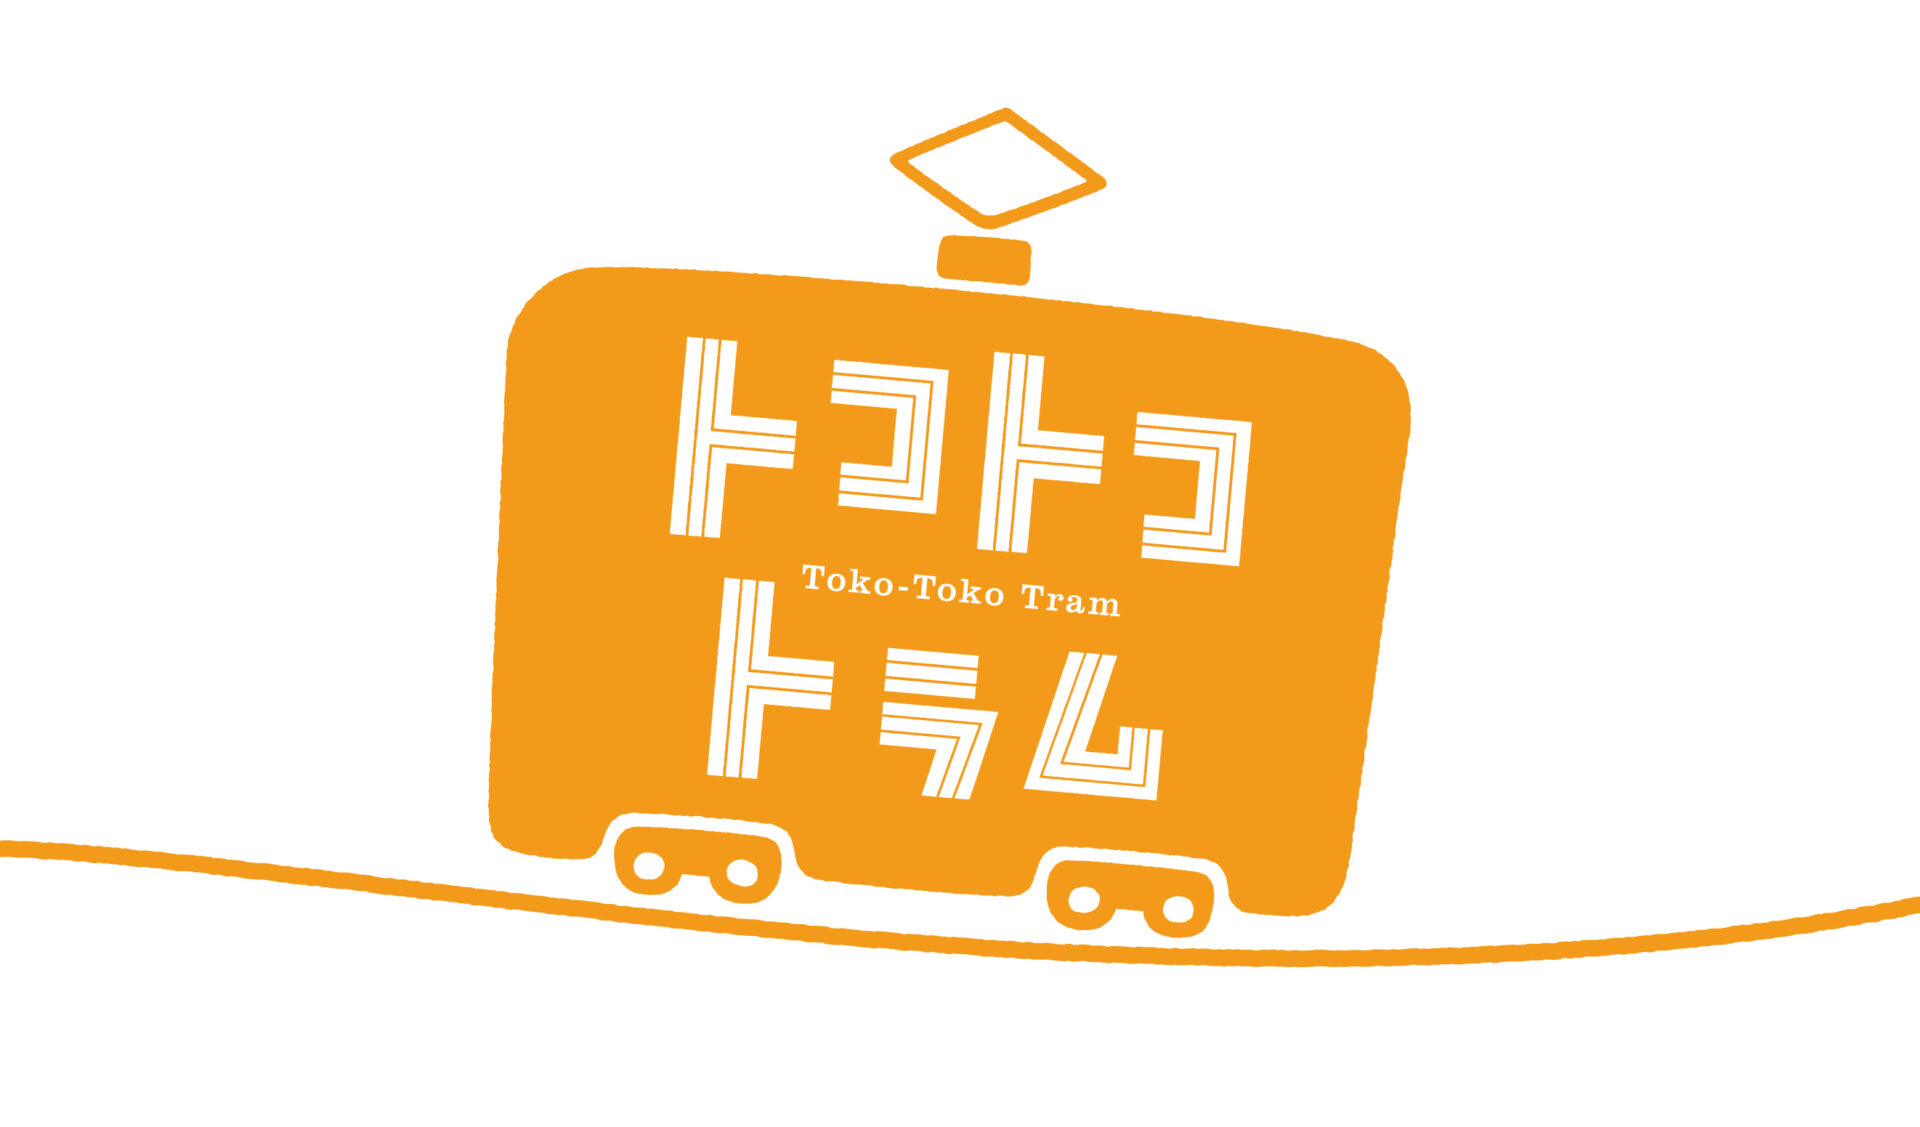 tram_logo_02